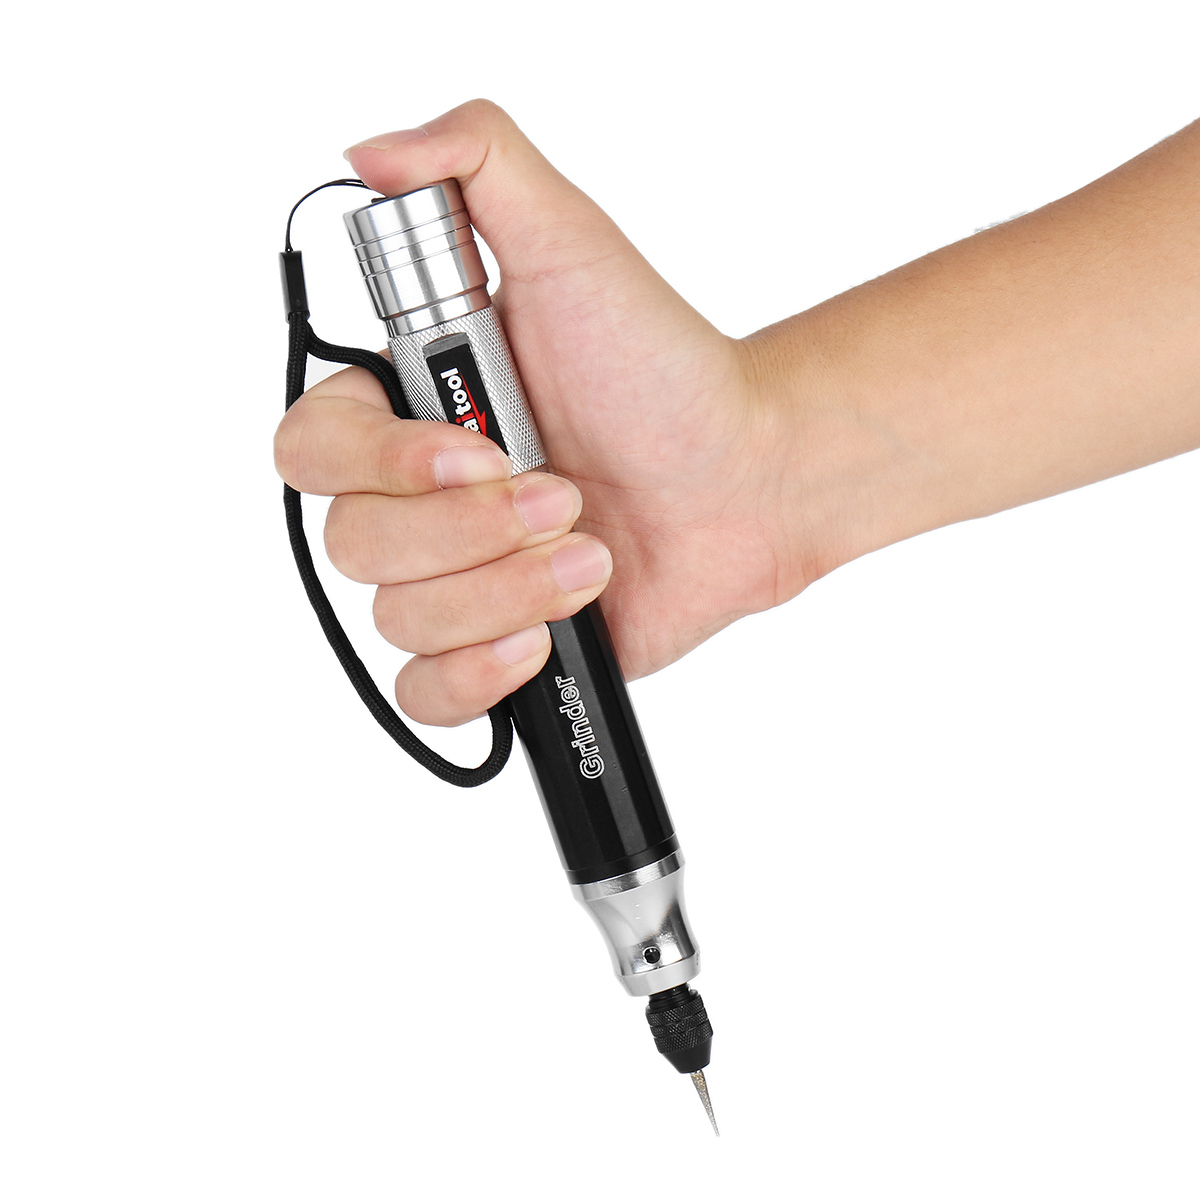 Raitool™ 3.7V 35W Mini Power Drills Electric Grinder Cordless Engraving Pen 39